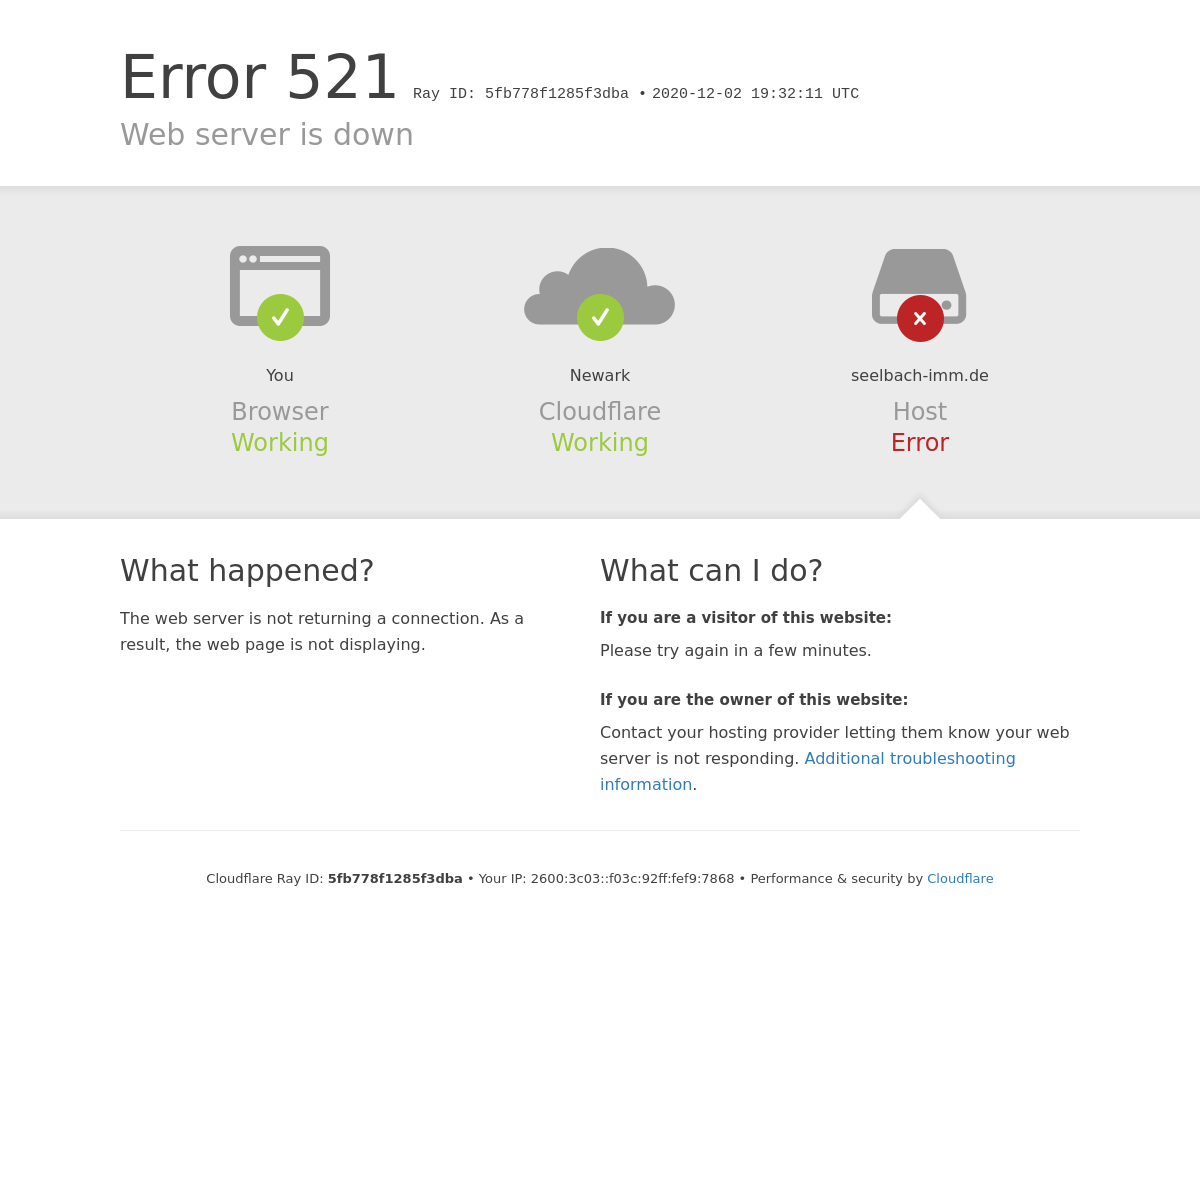 seelbach-imm.de - 521- Web server is down